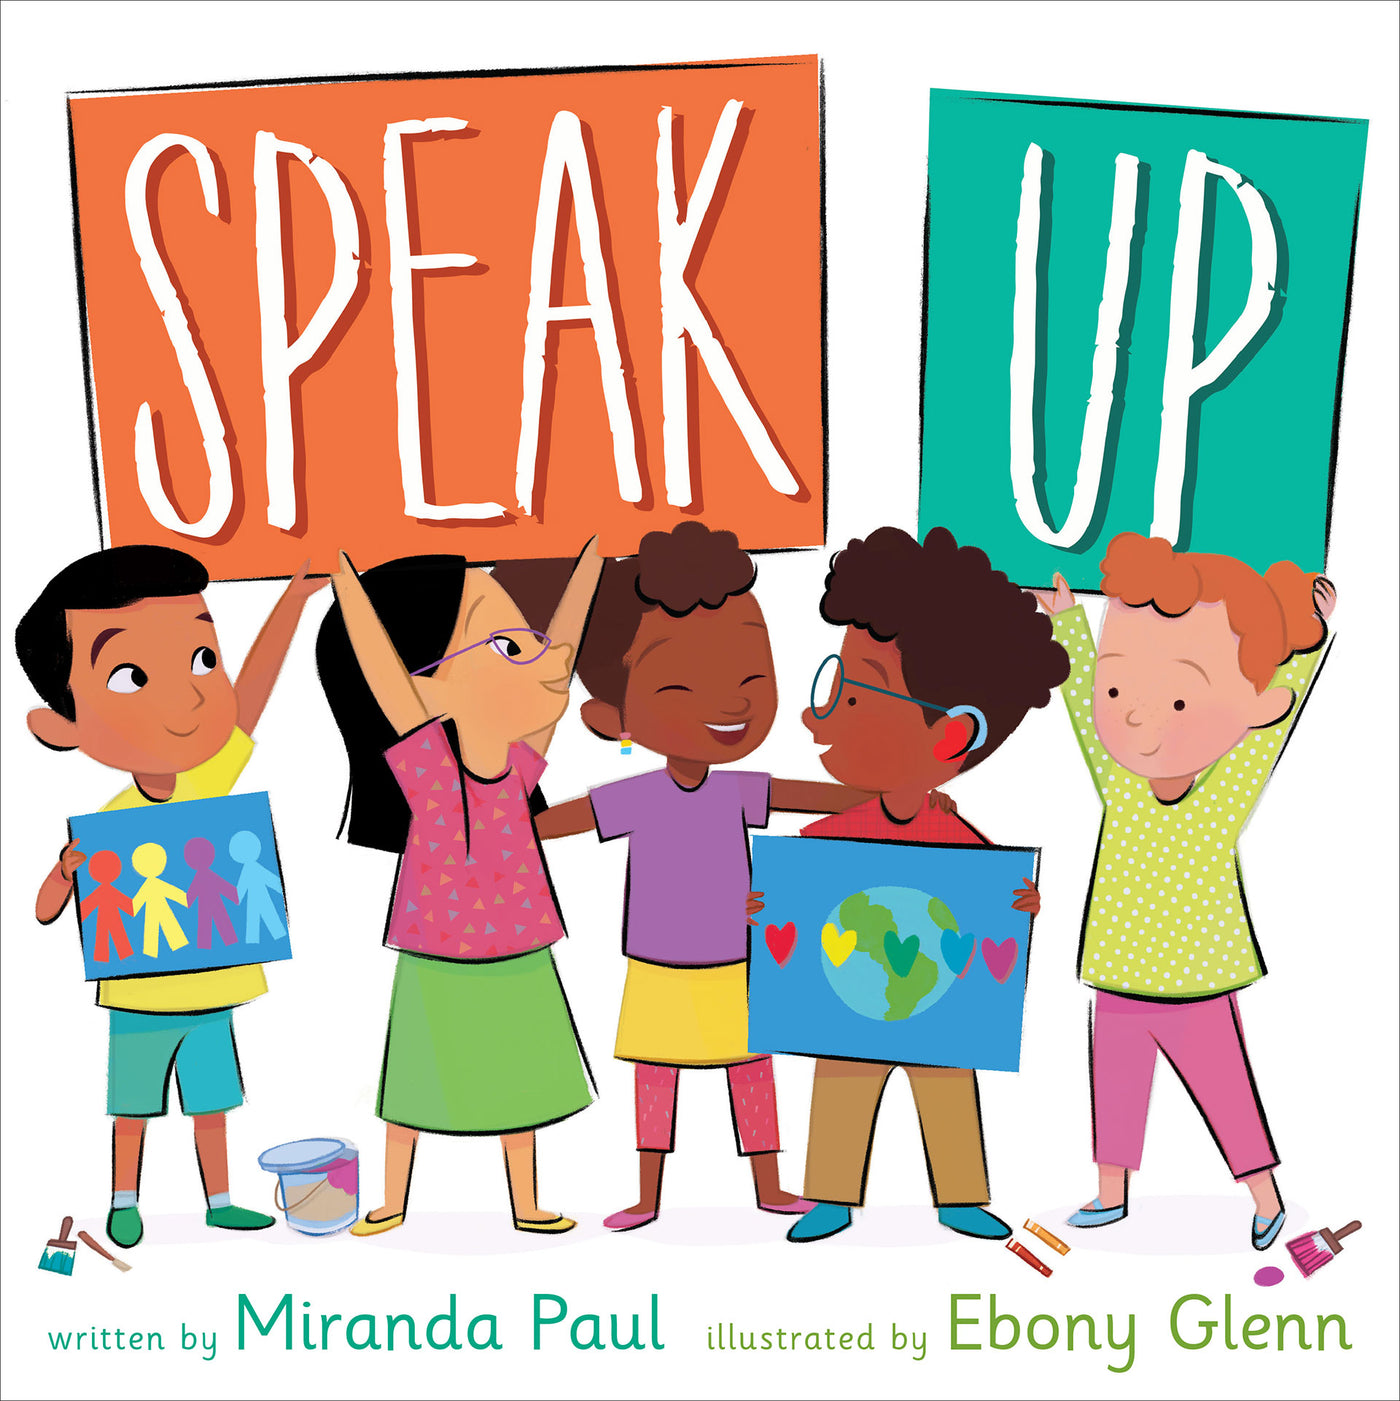 "Speak Up" written by Miranda Paul and illustrated by Ebony Glenn